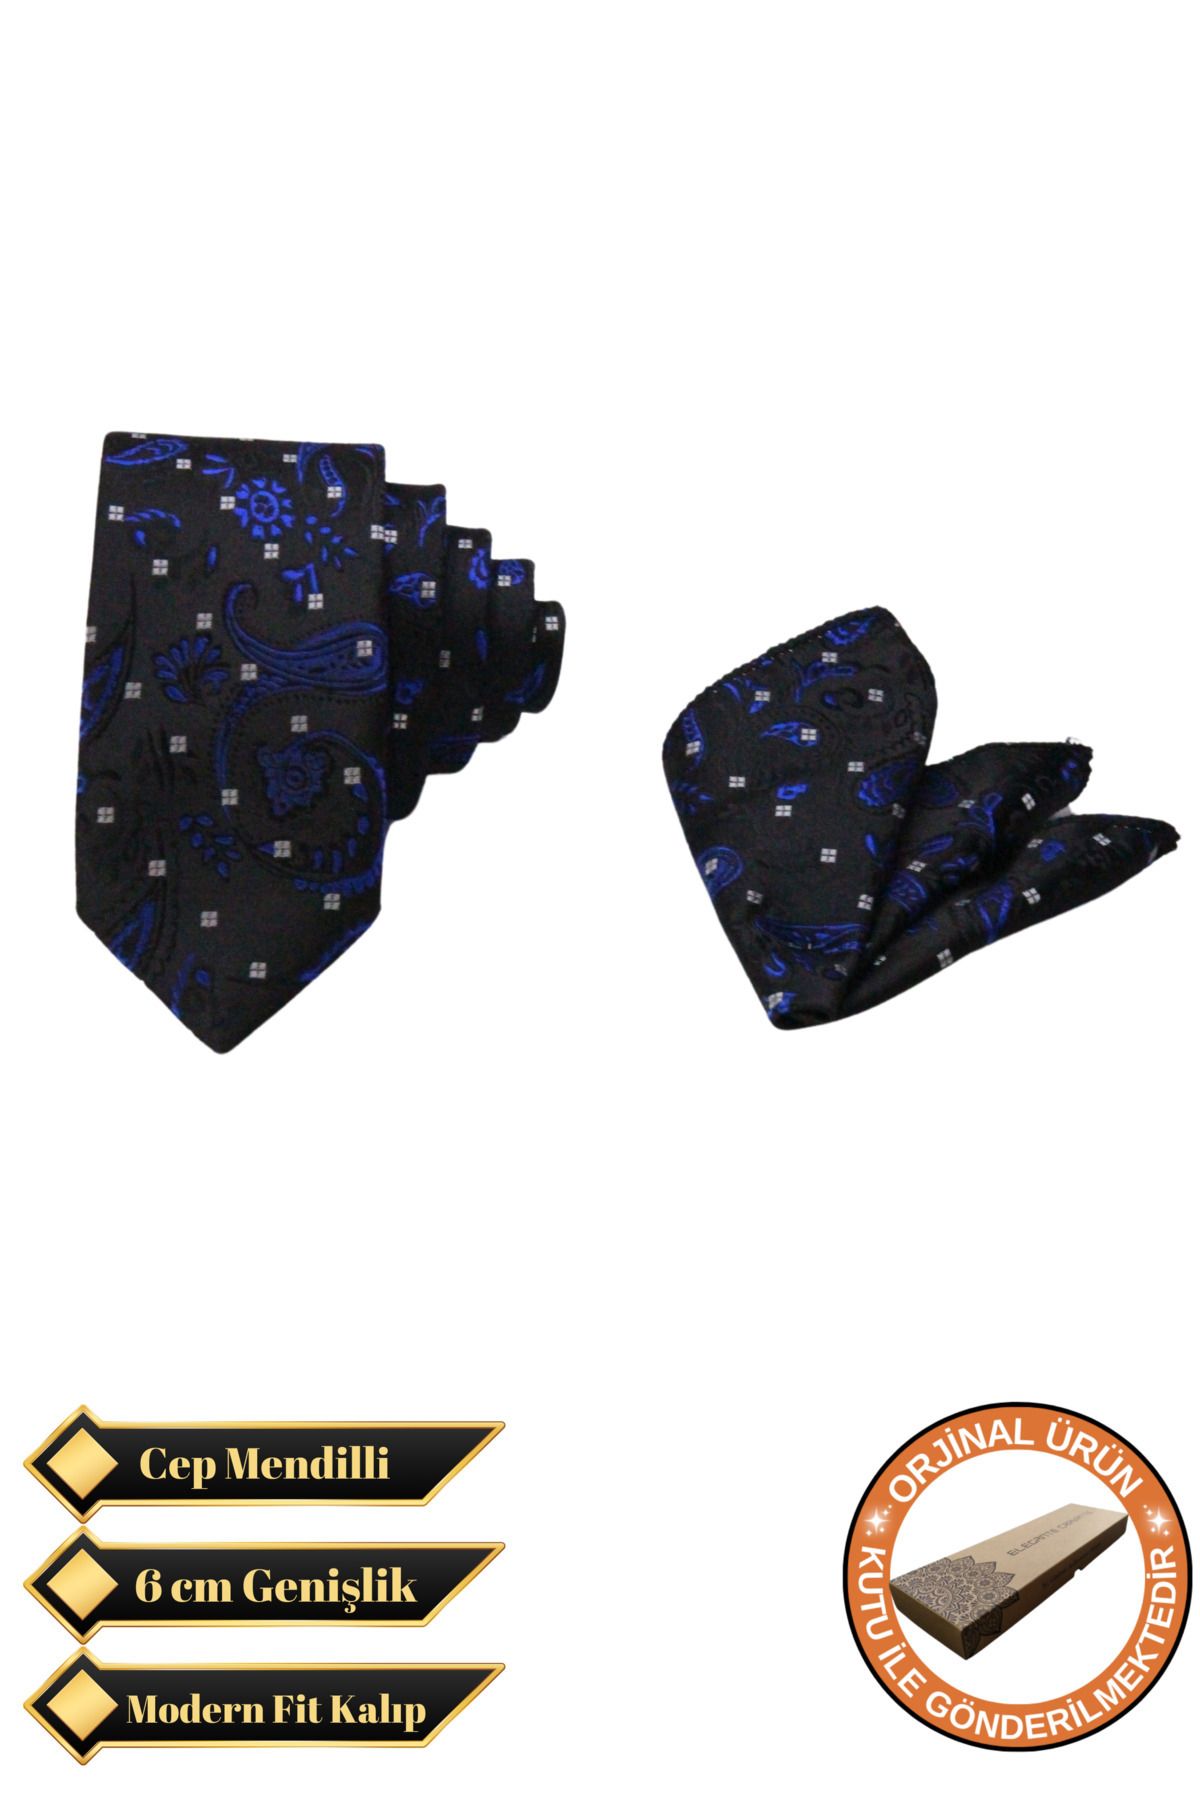 Elegante Cravatte Siyah ve Mavi Renk Şal Desen Exclusive Model Kravat ve Cep Mendili